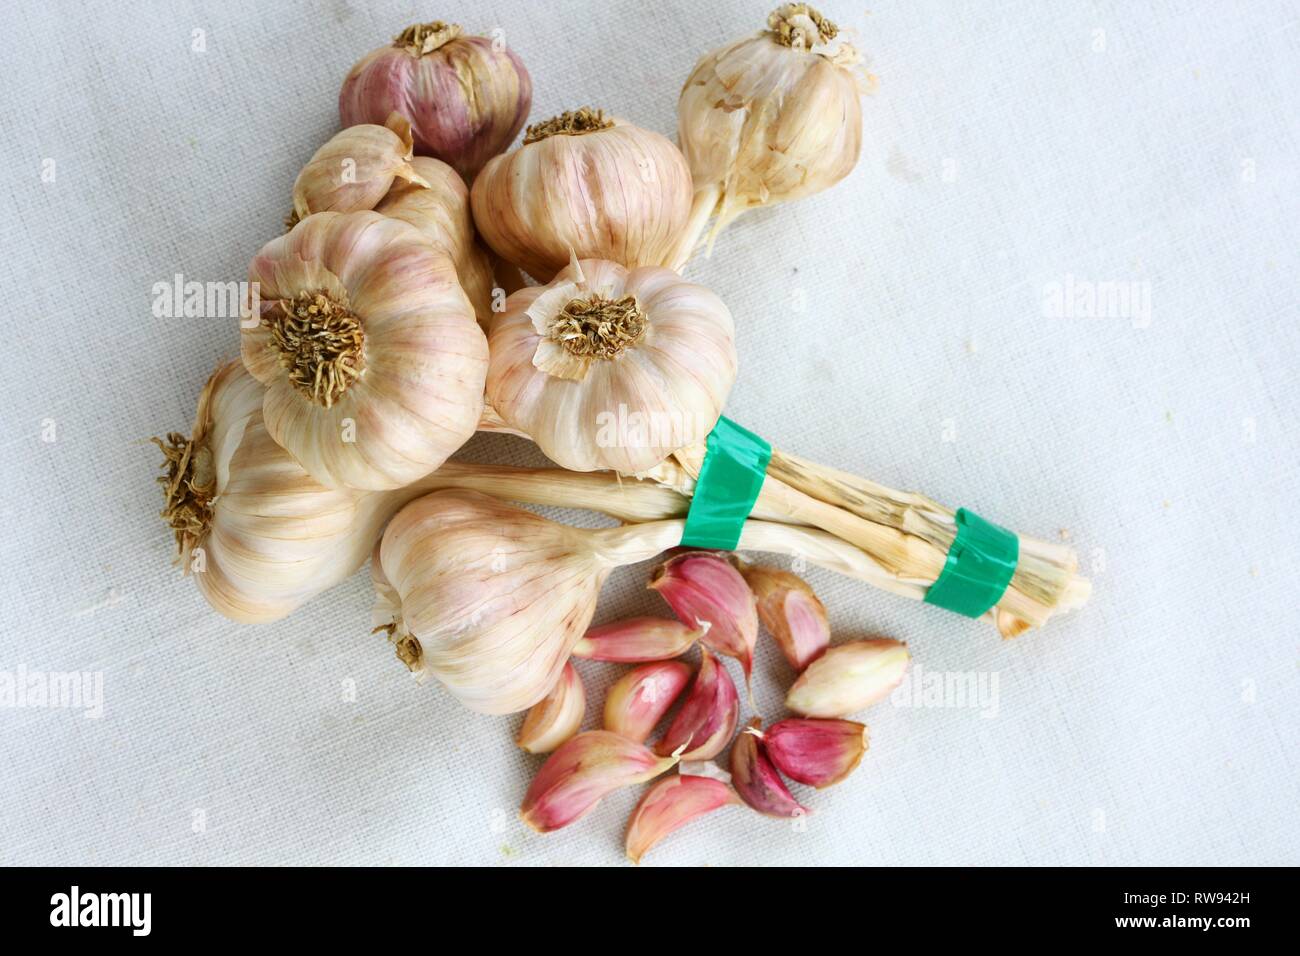 Bunch of garlic and garlic clove on white background Stock Photo